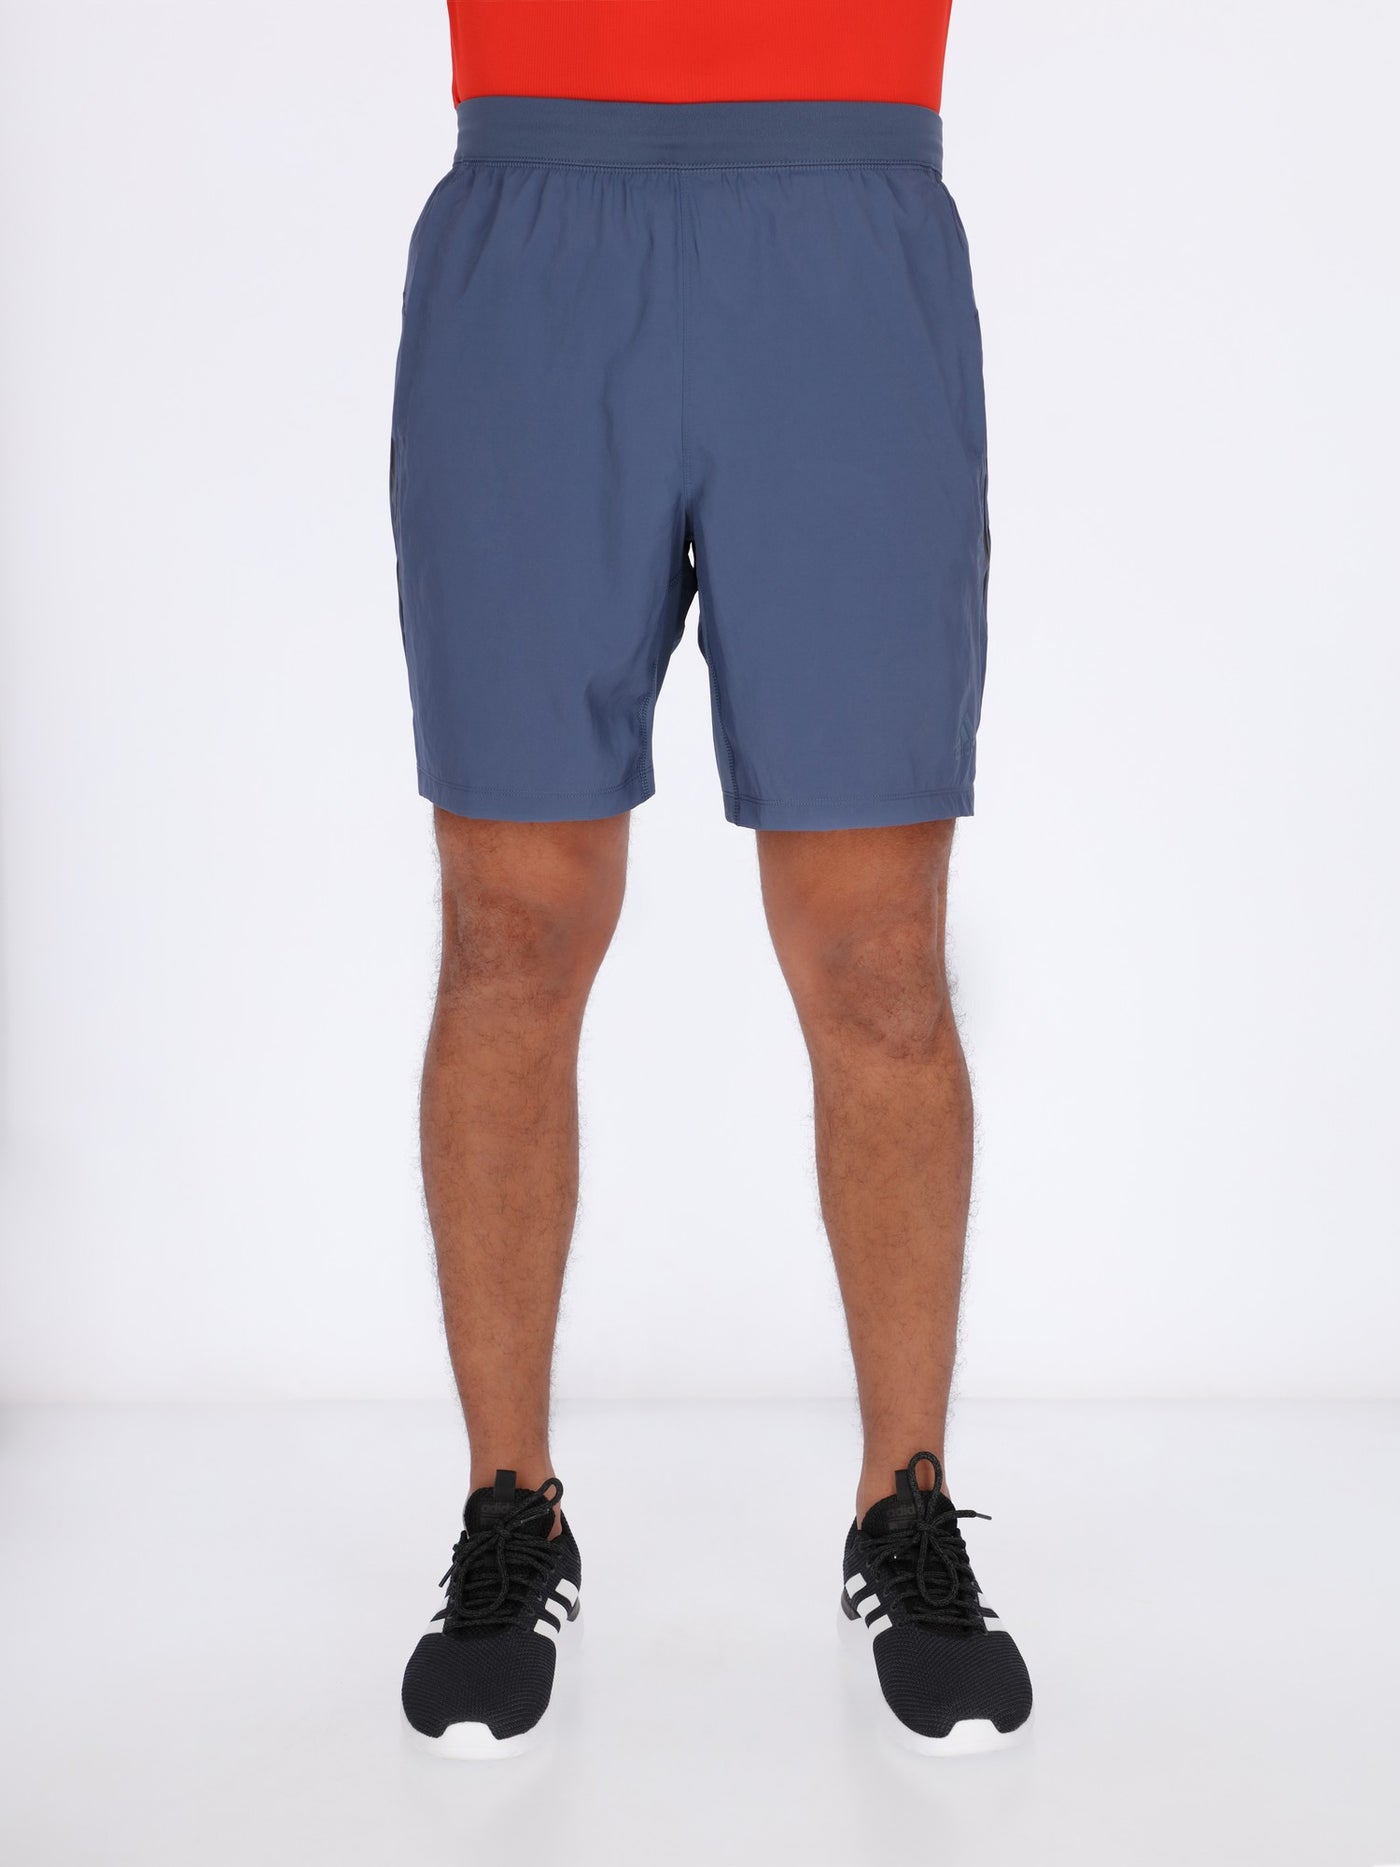 Men's 3 Stripes Shorts - EB7888